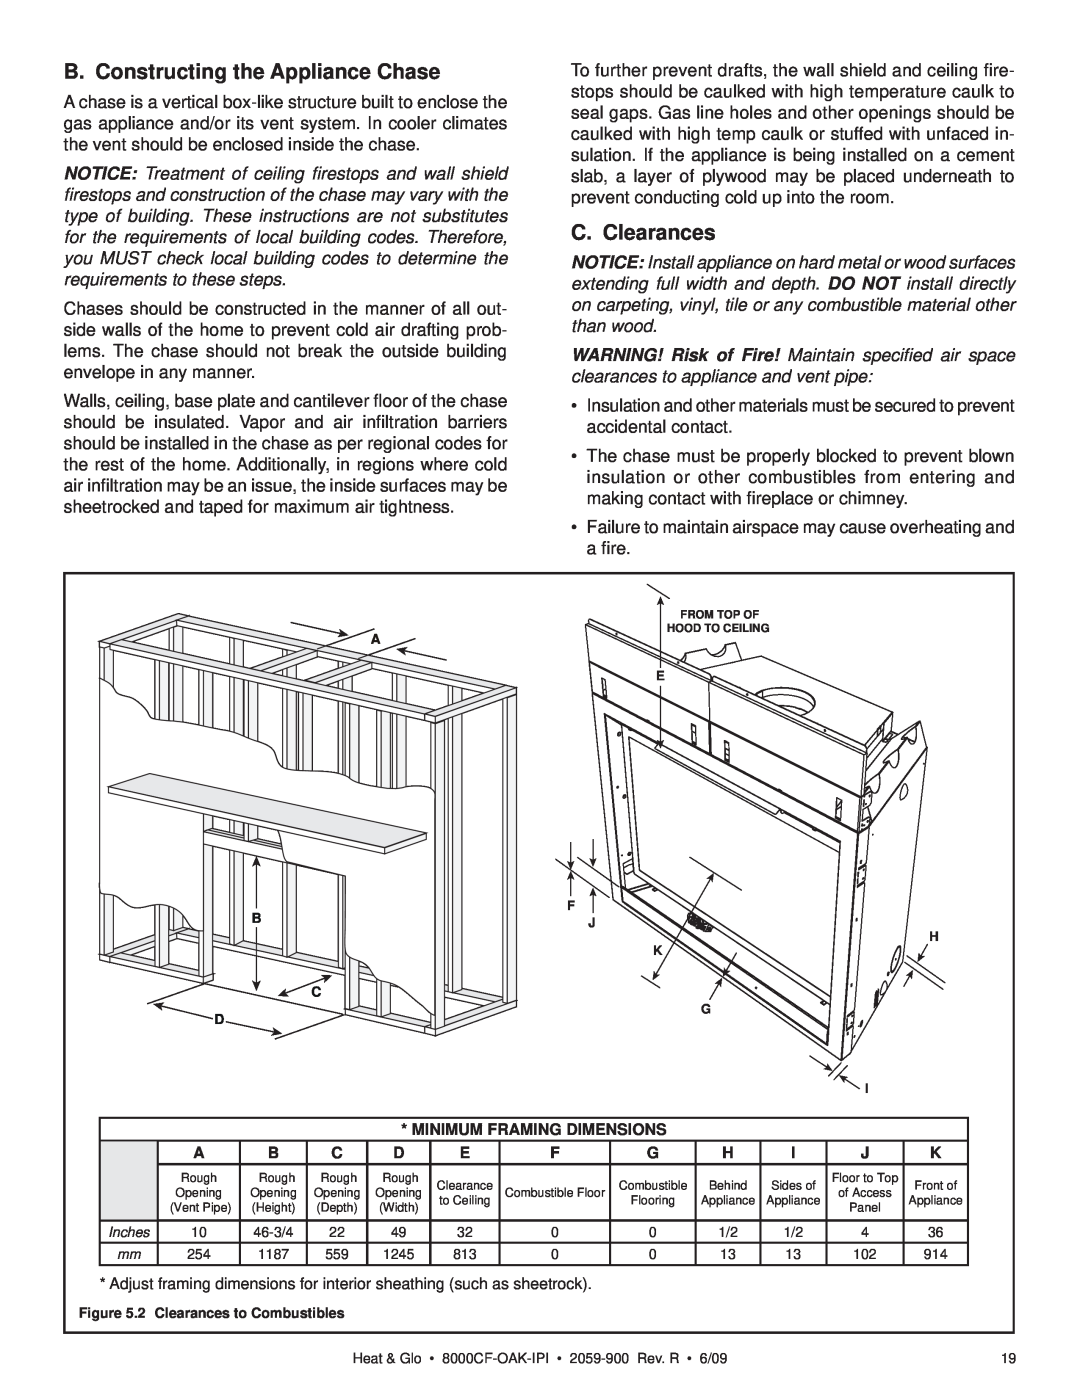 Heat & Glo LifeStyle 8000CF-OAK-IPI, 8000CFLP-OAKIPI owner manual B. Constructing the Appliance Chase, C. Clearances 